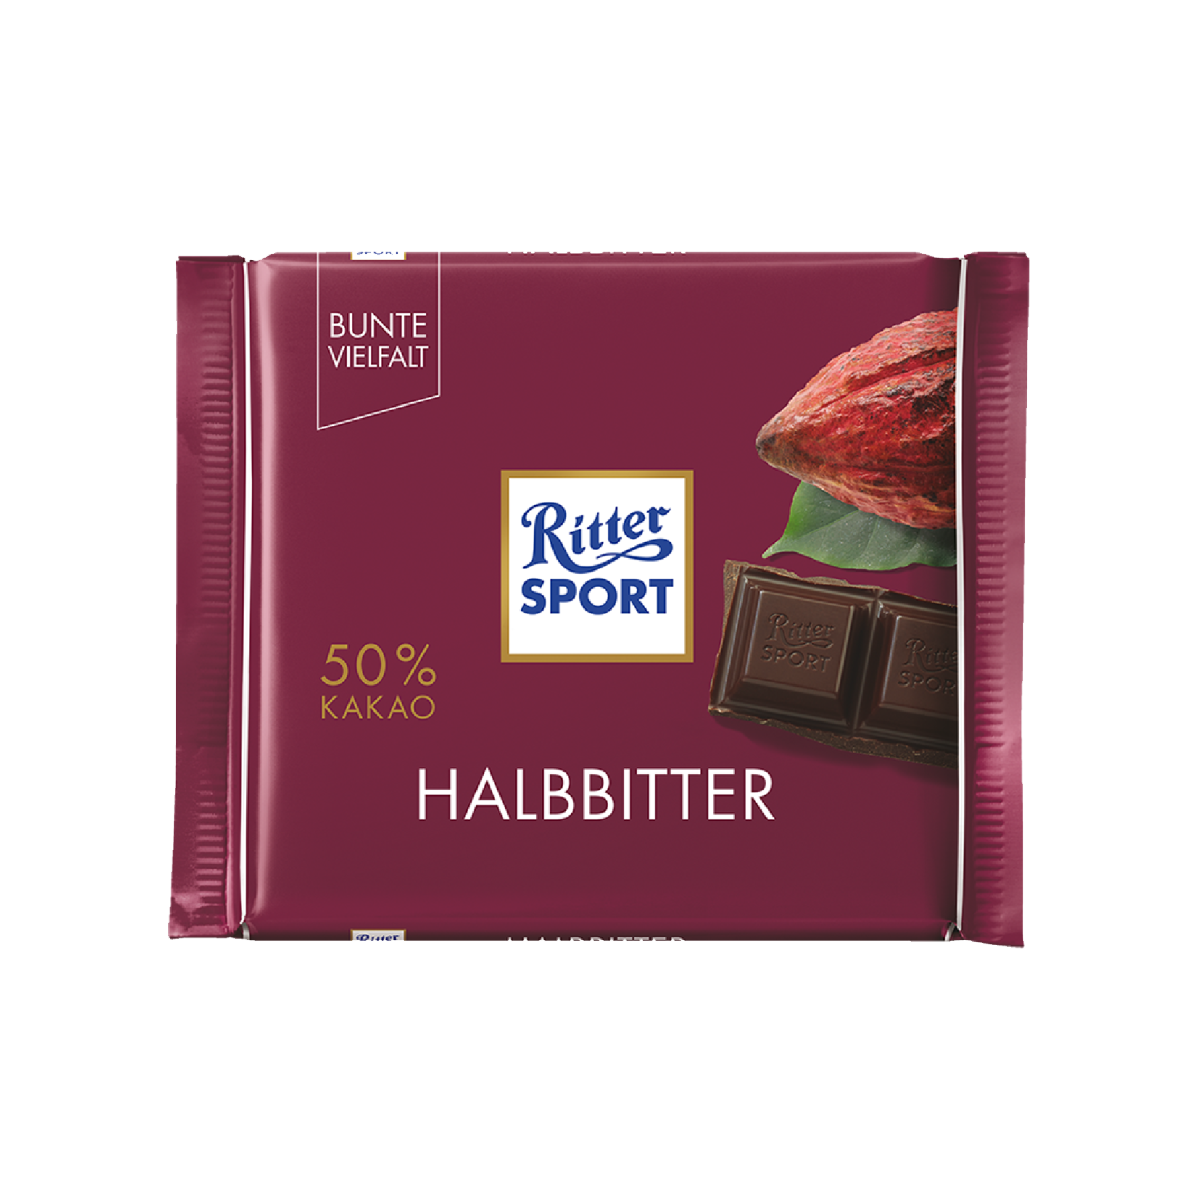 Ritter Sport Chocolate Dark 50% Halbbitter 100g